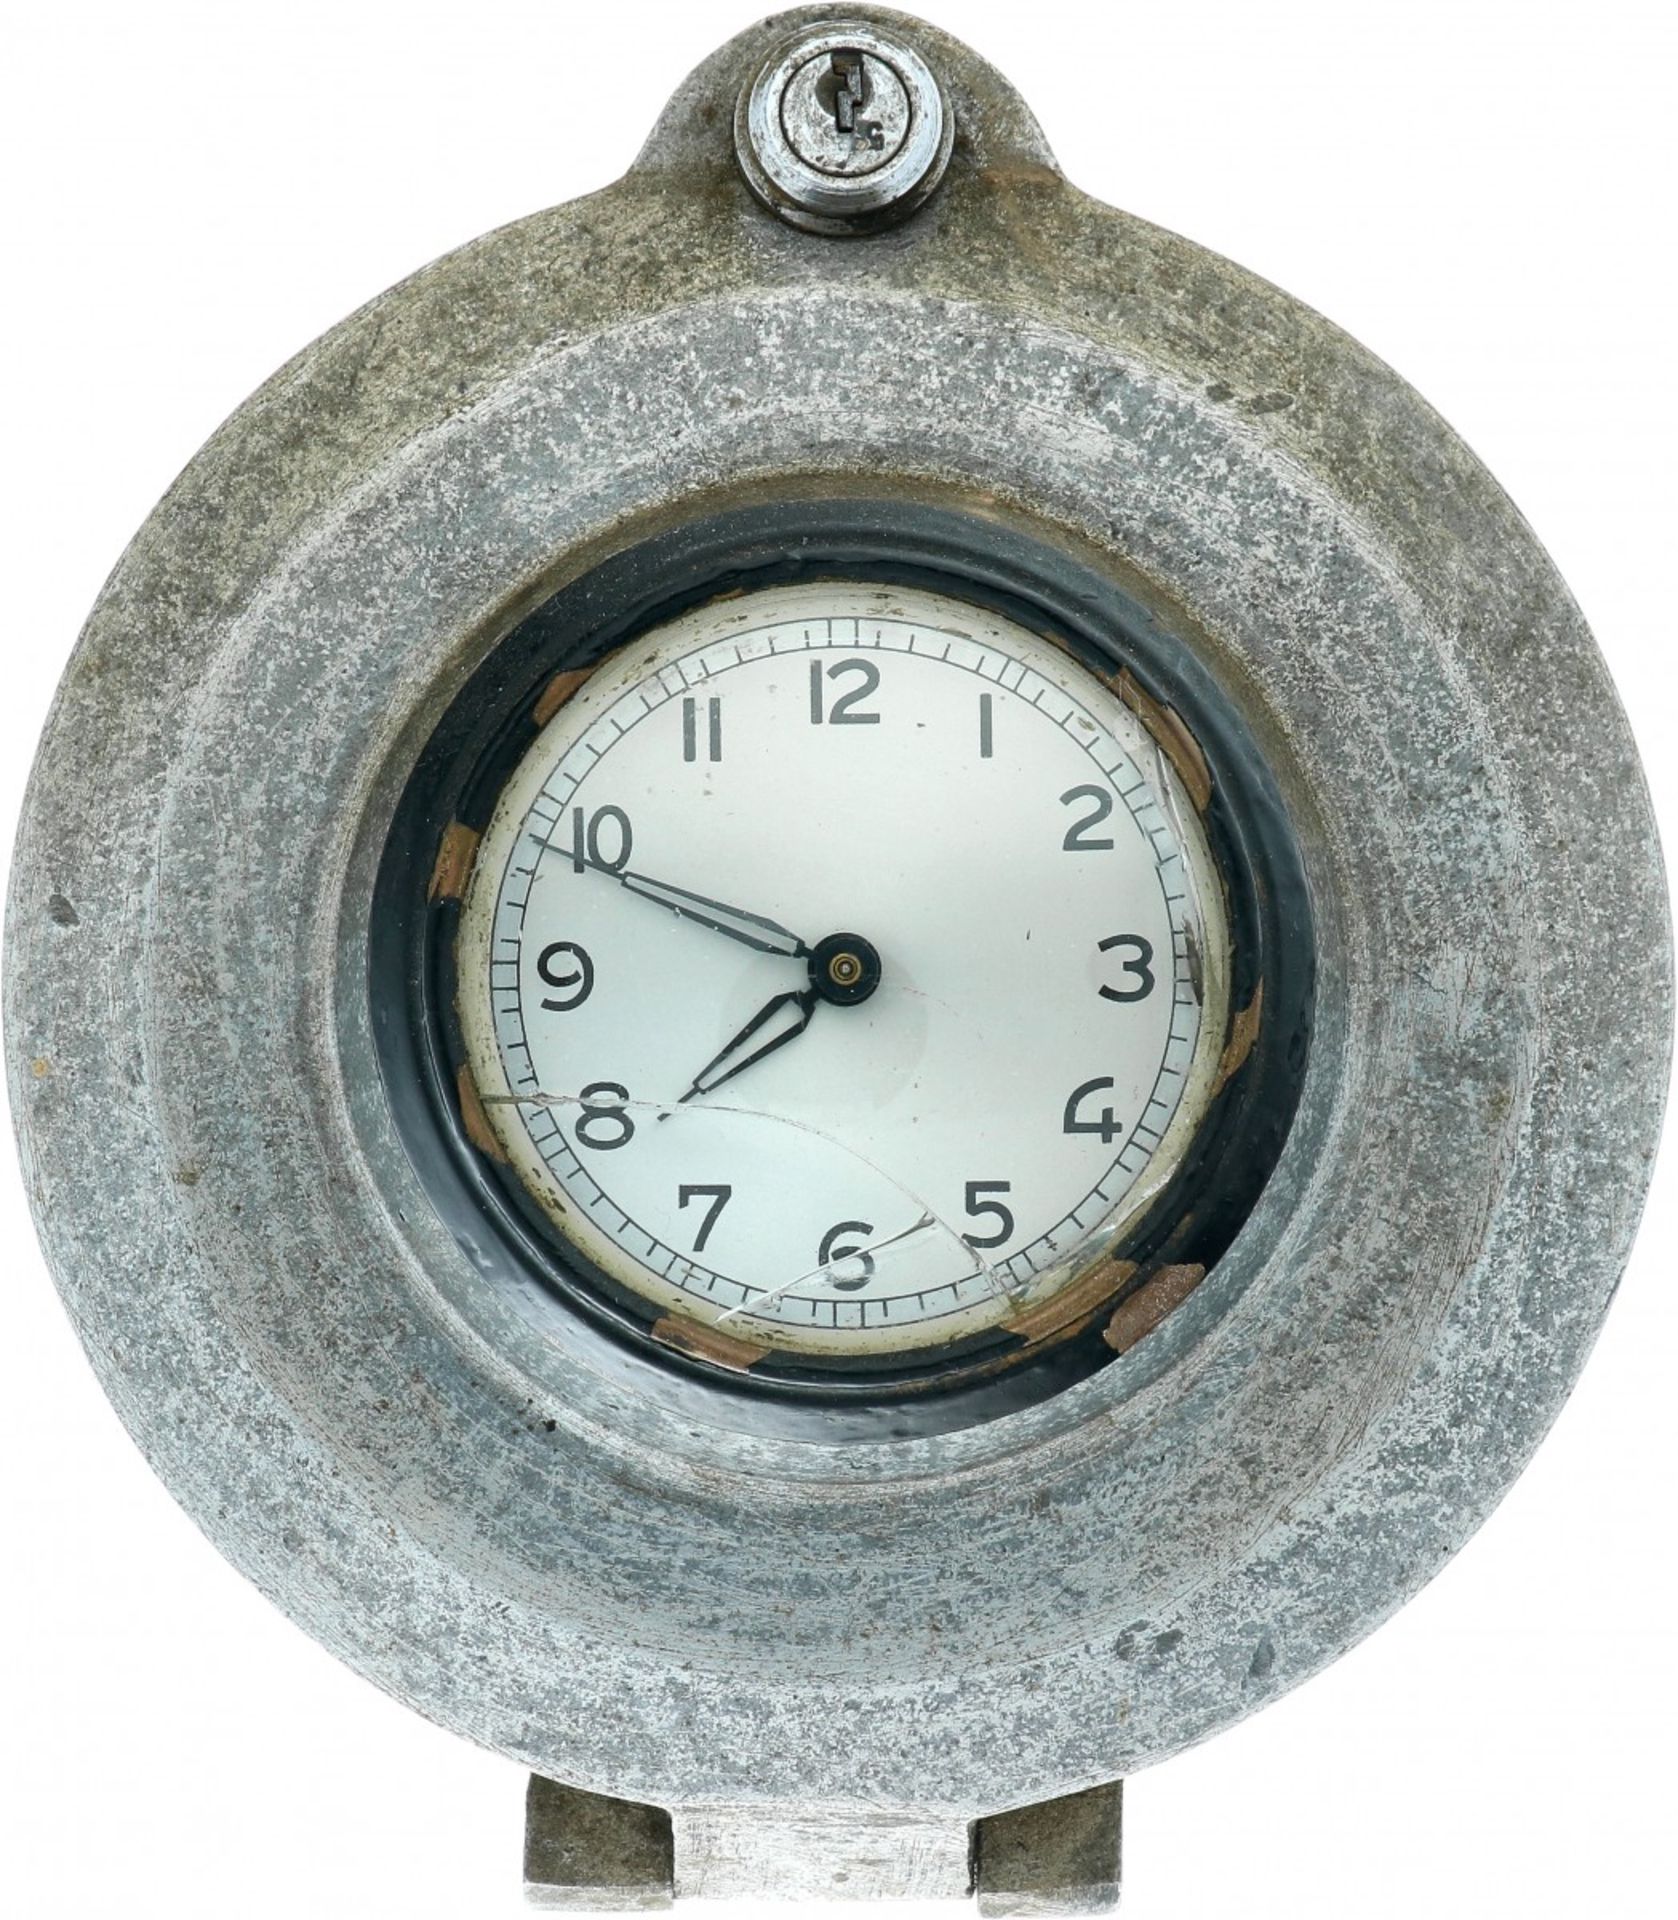 Industrial valve shaped wall clock